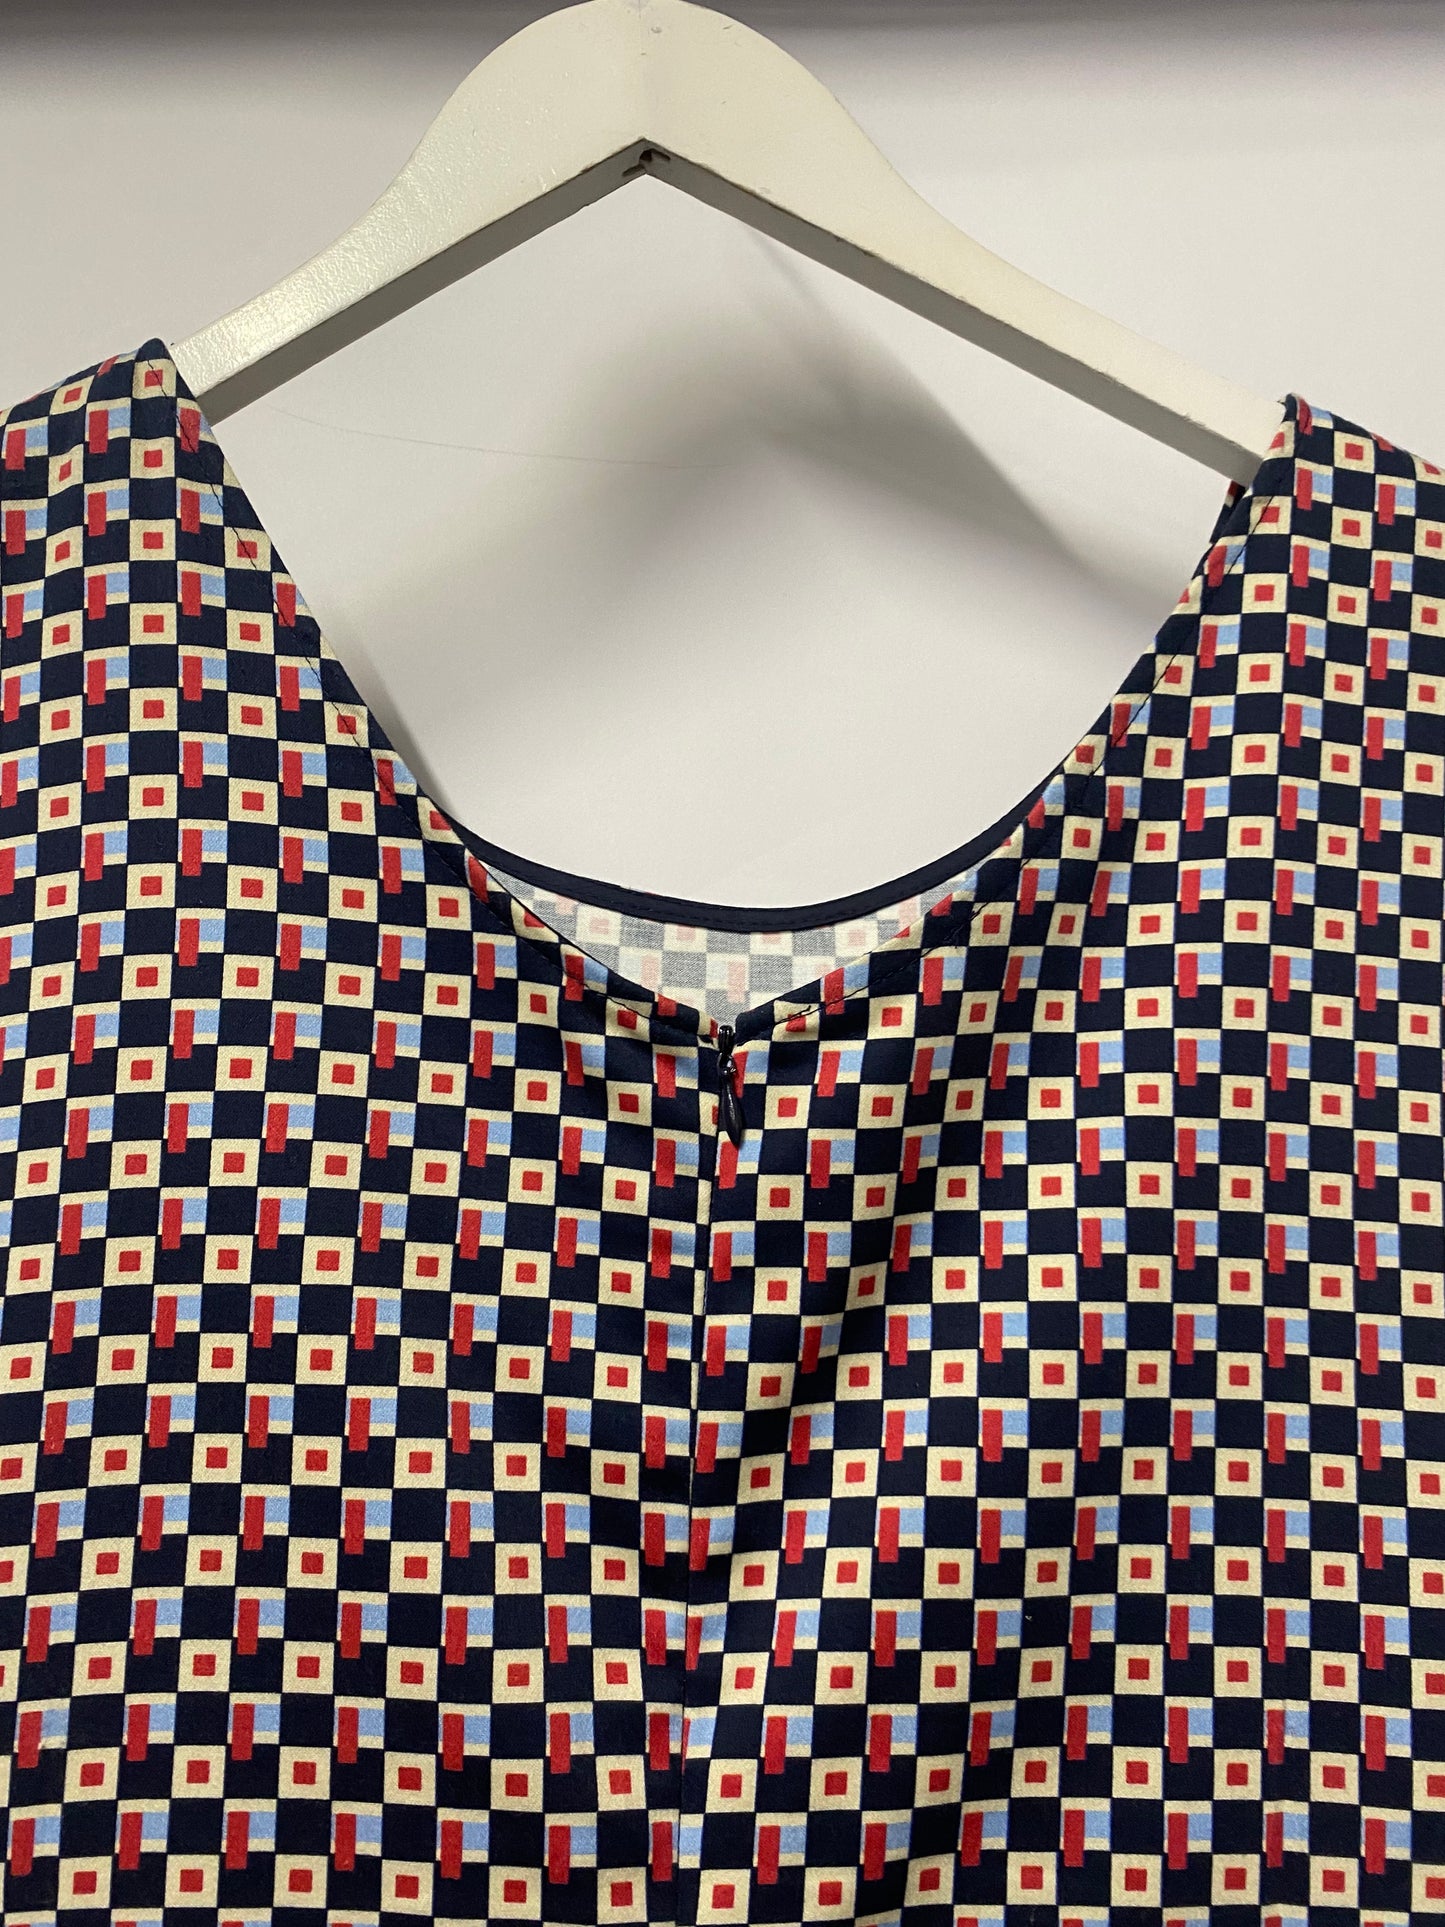 Elena Miro Navy Geometric Print Cotton dress UK 18